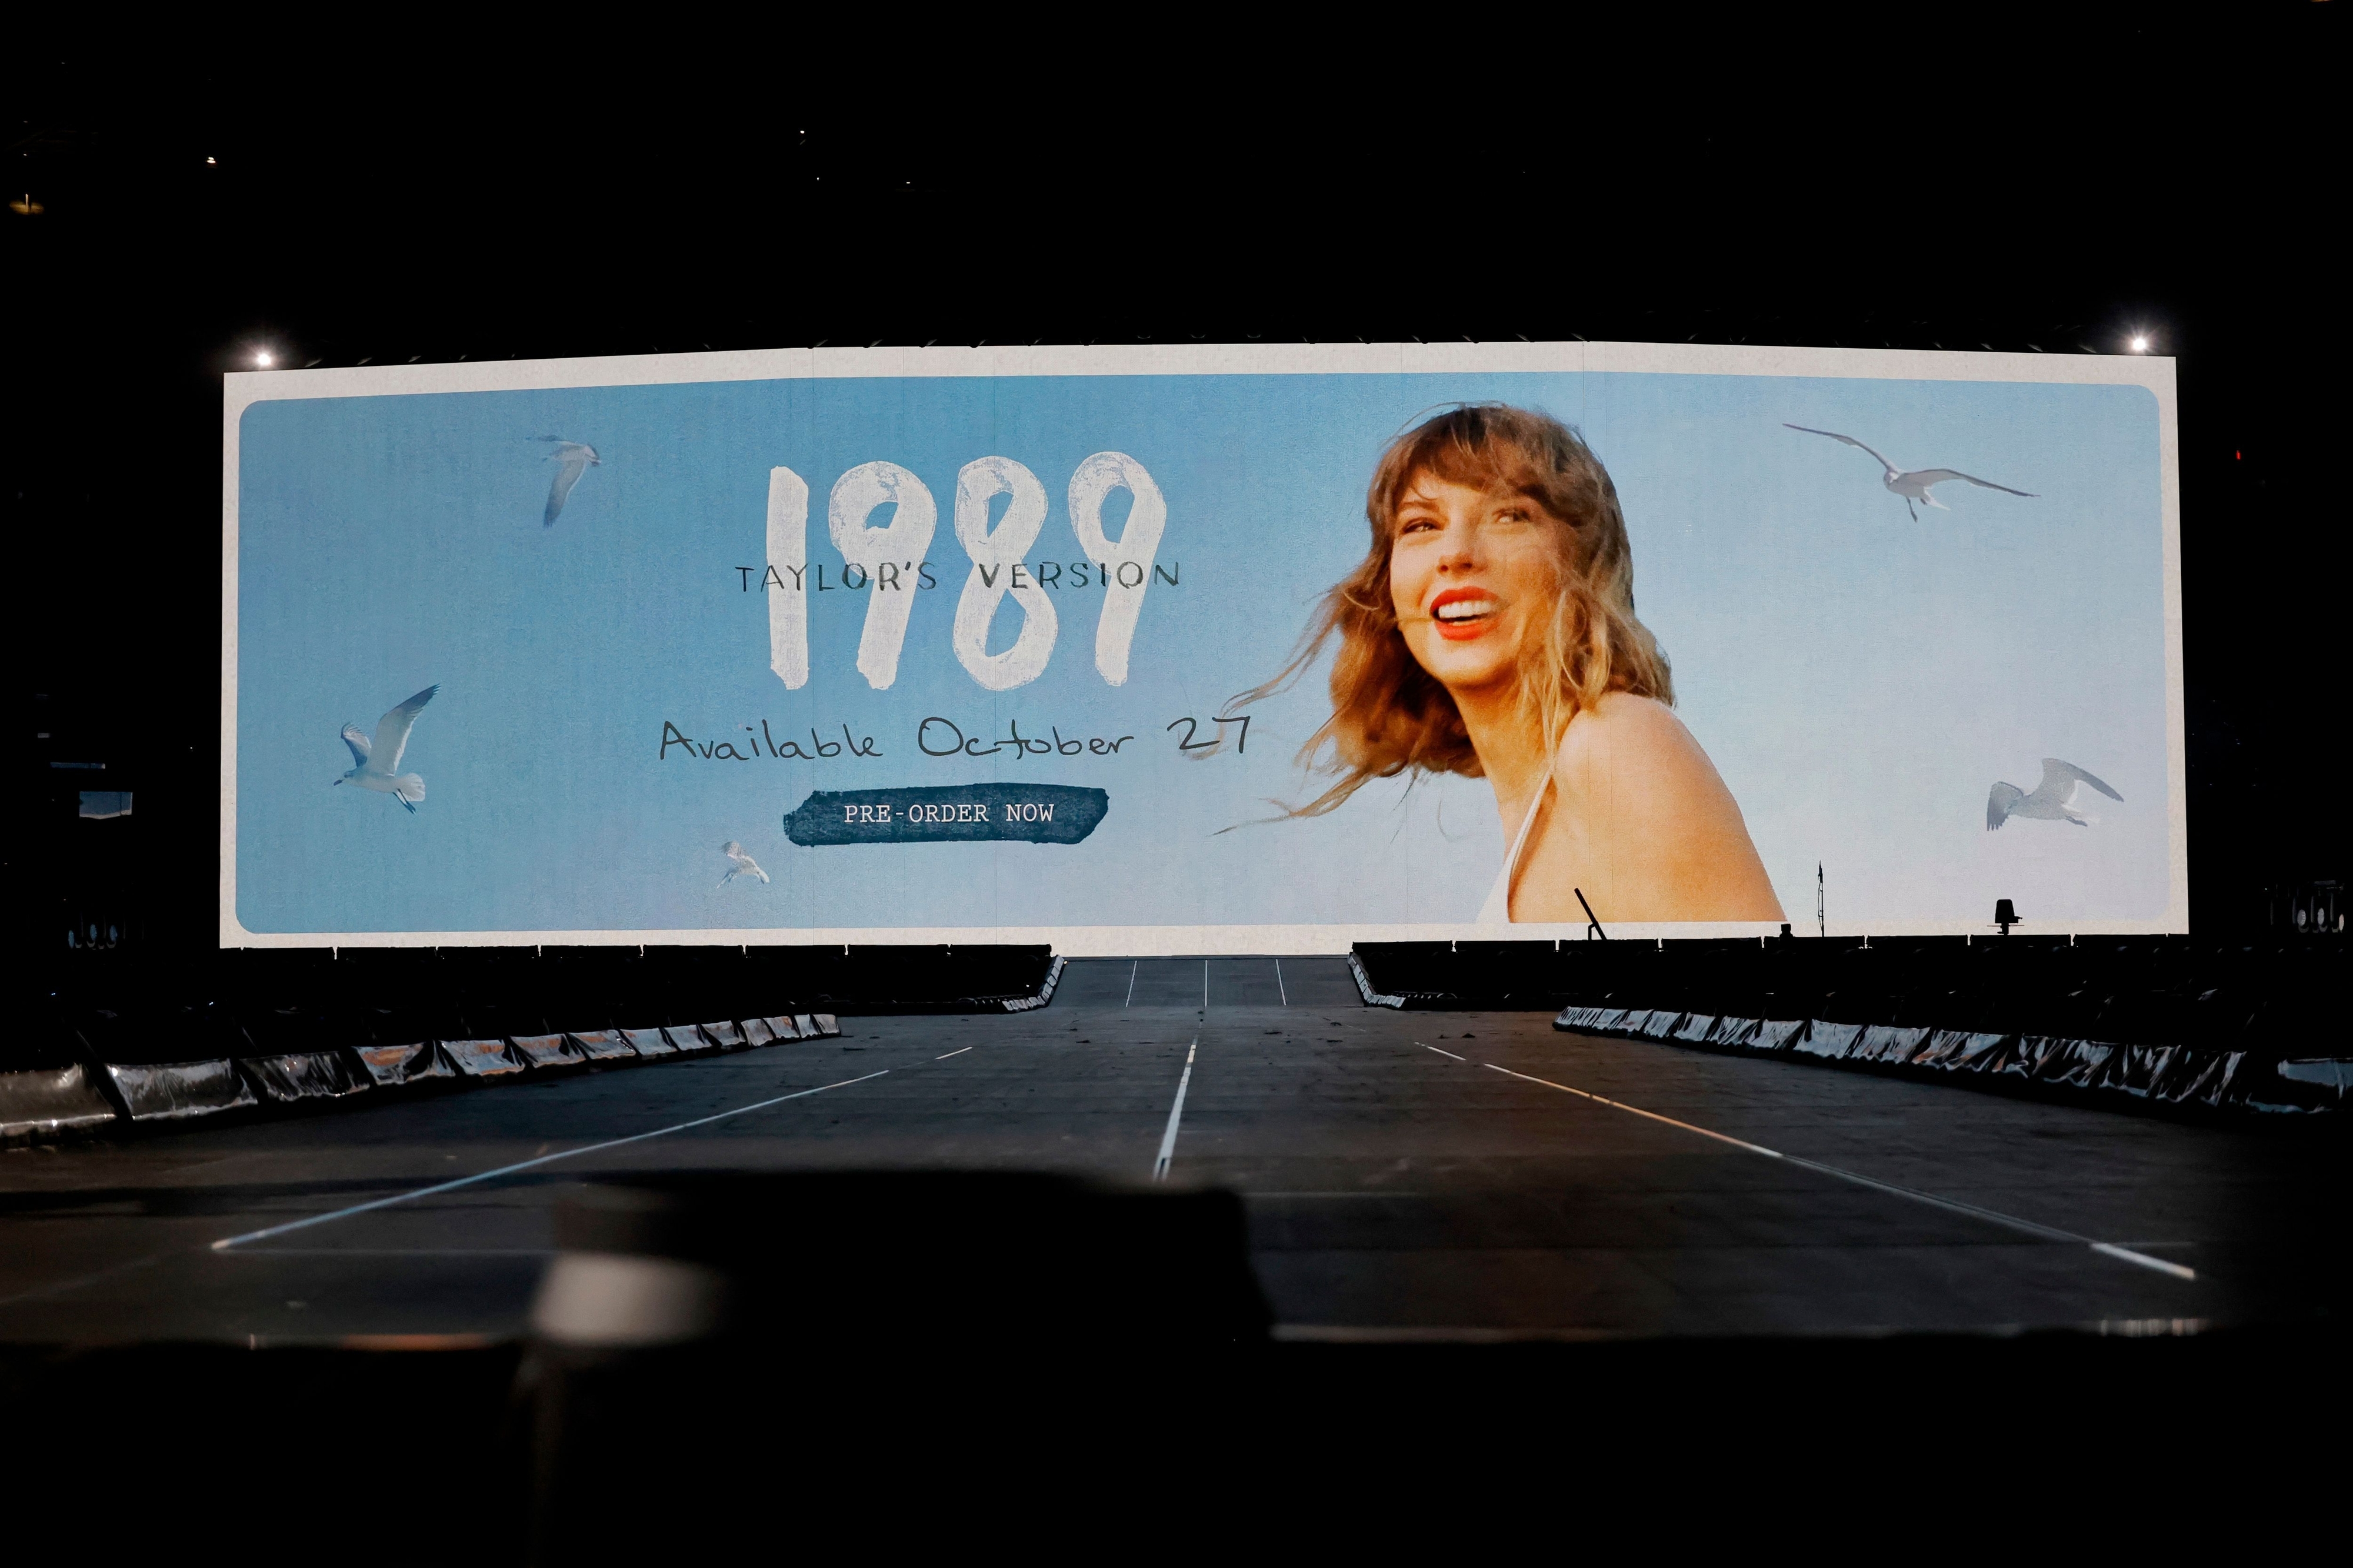 A billboard for 1989